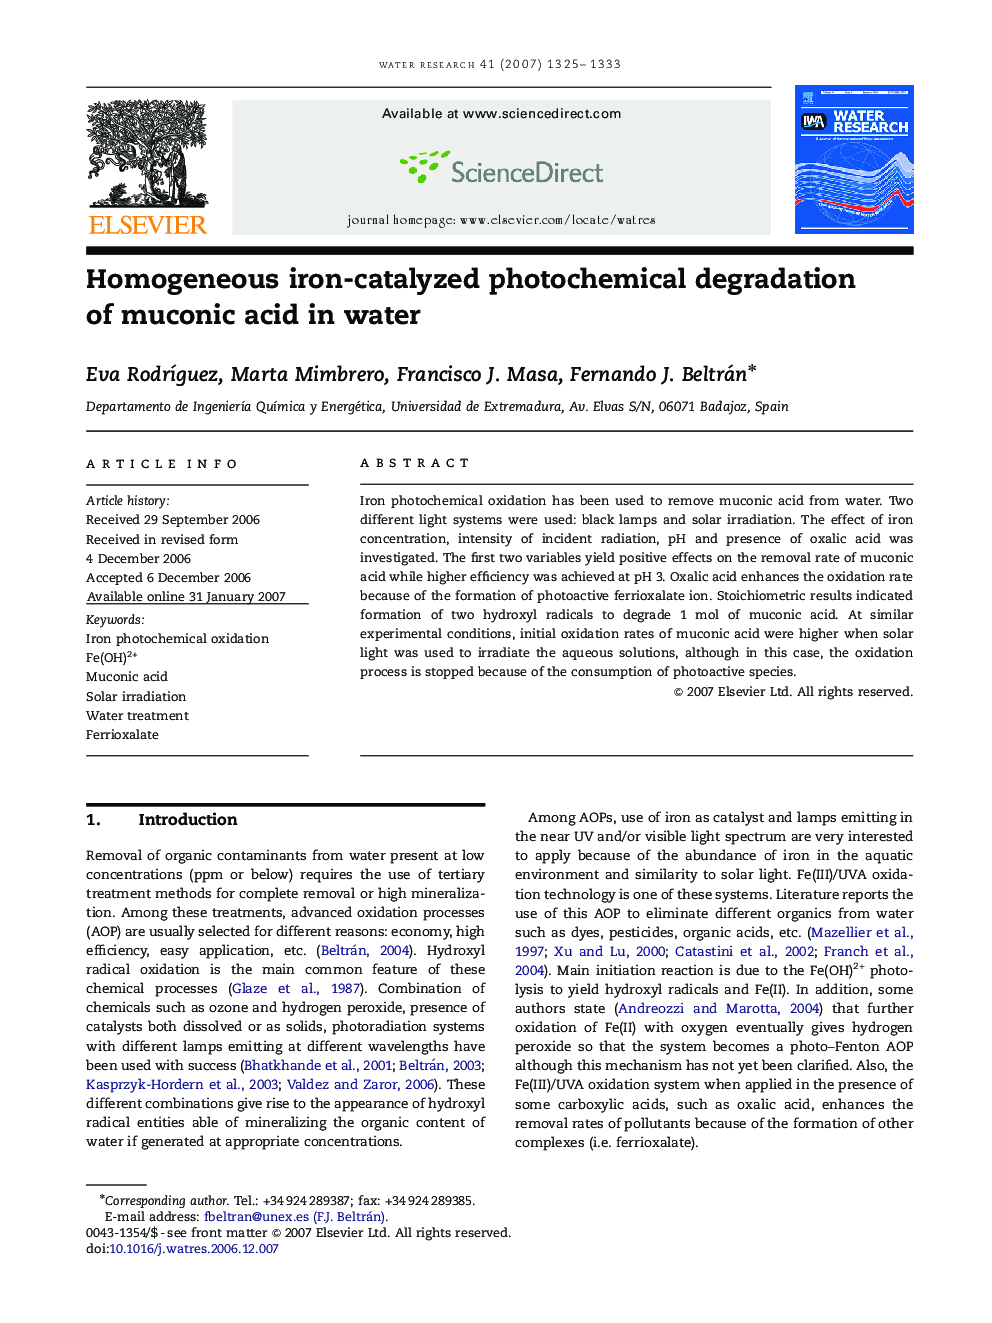 Homogeneous iron-catalyzed photochemical degradation of muconic acid in water